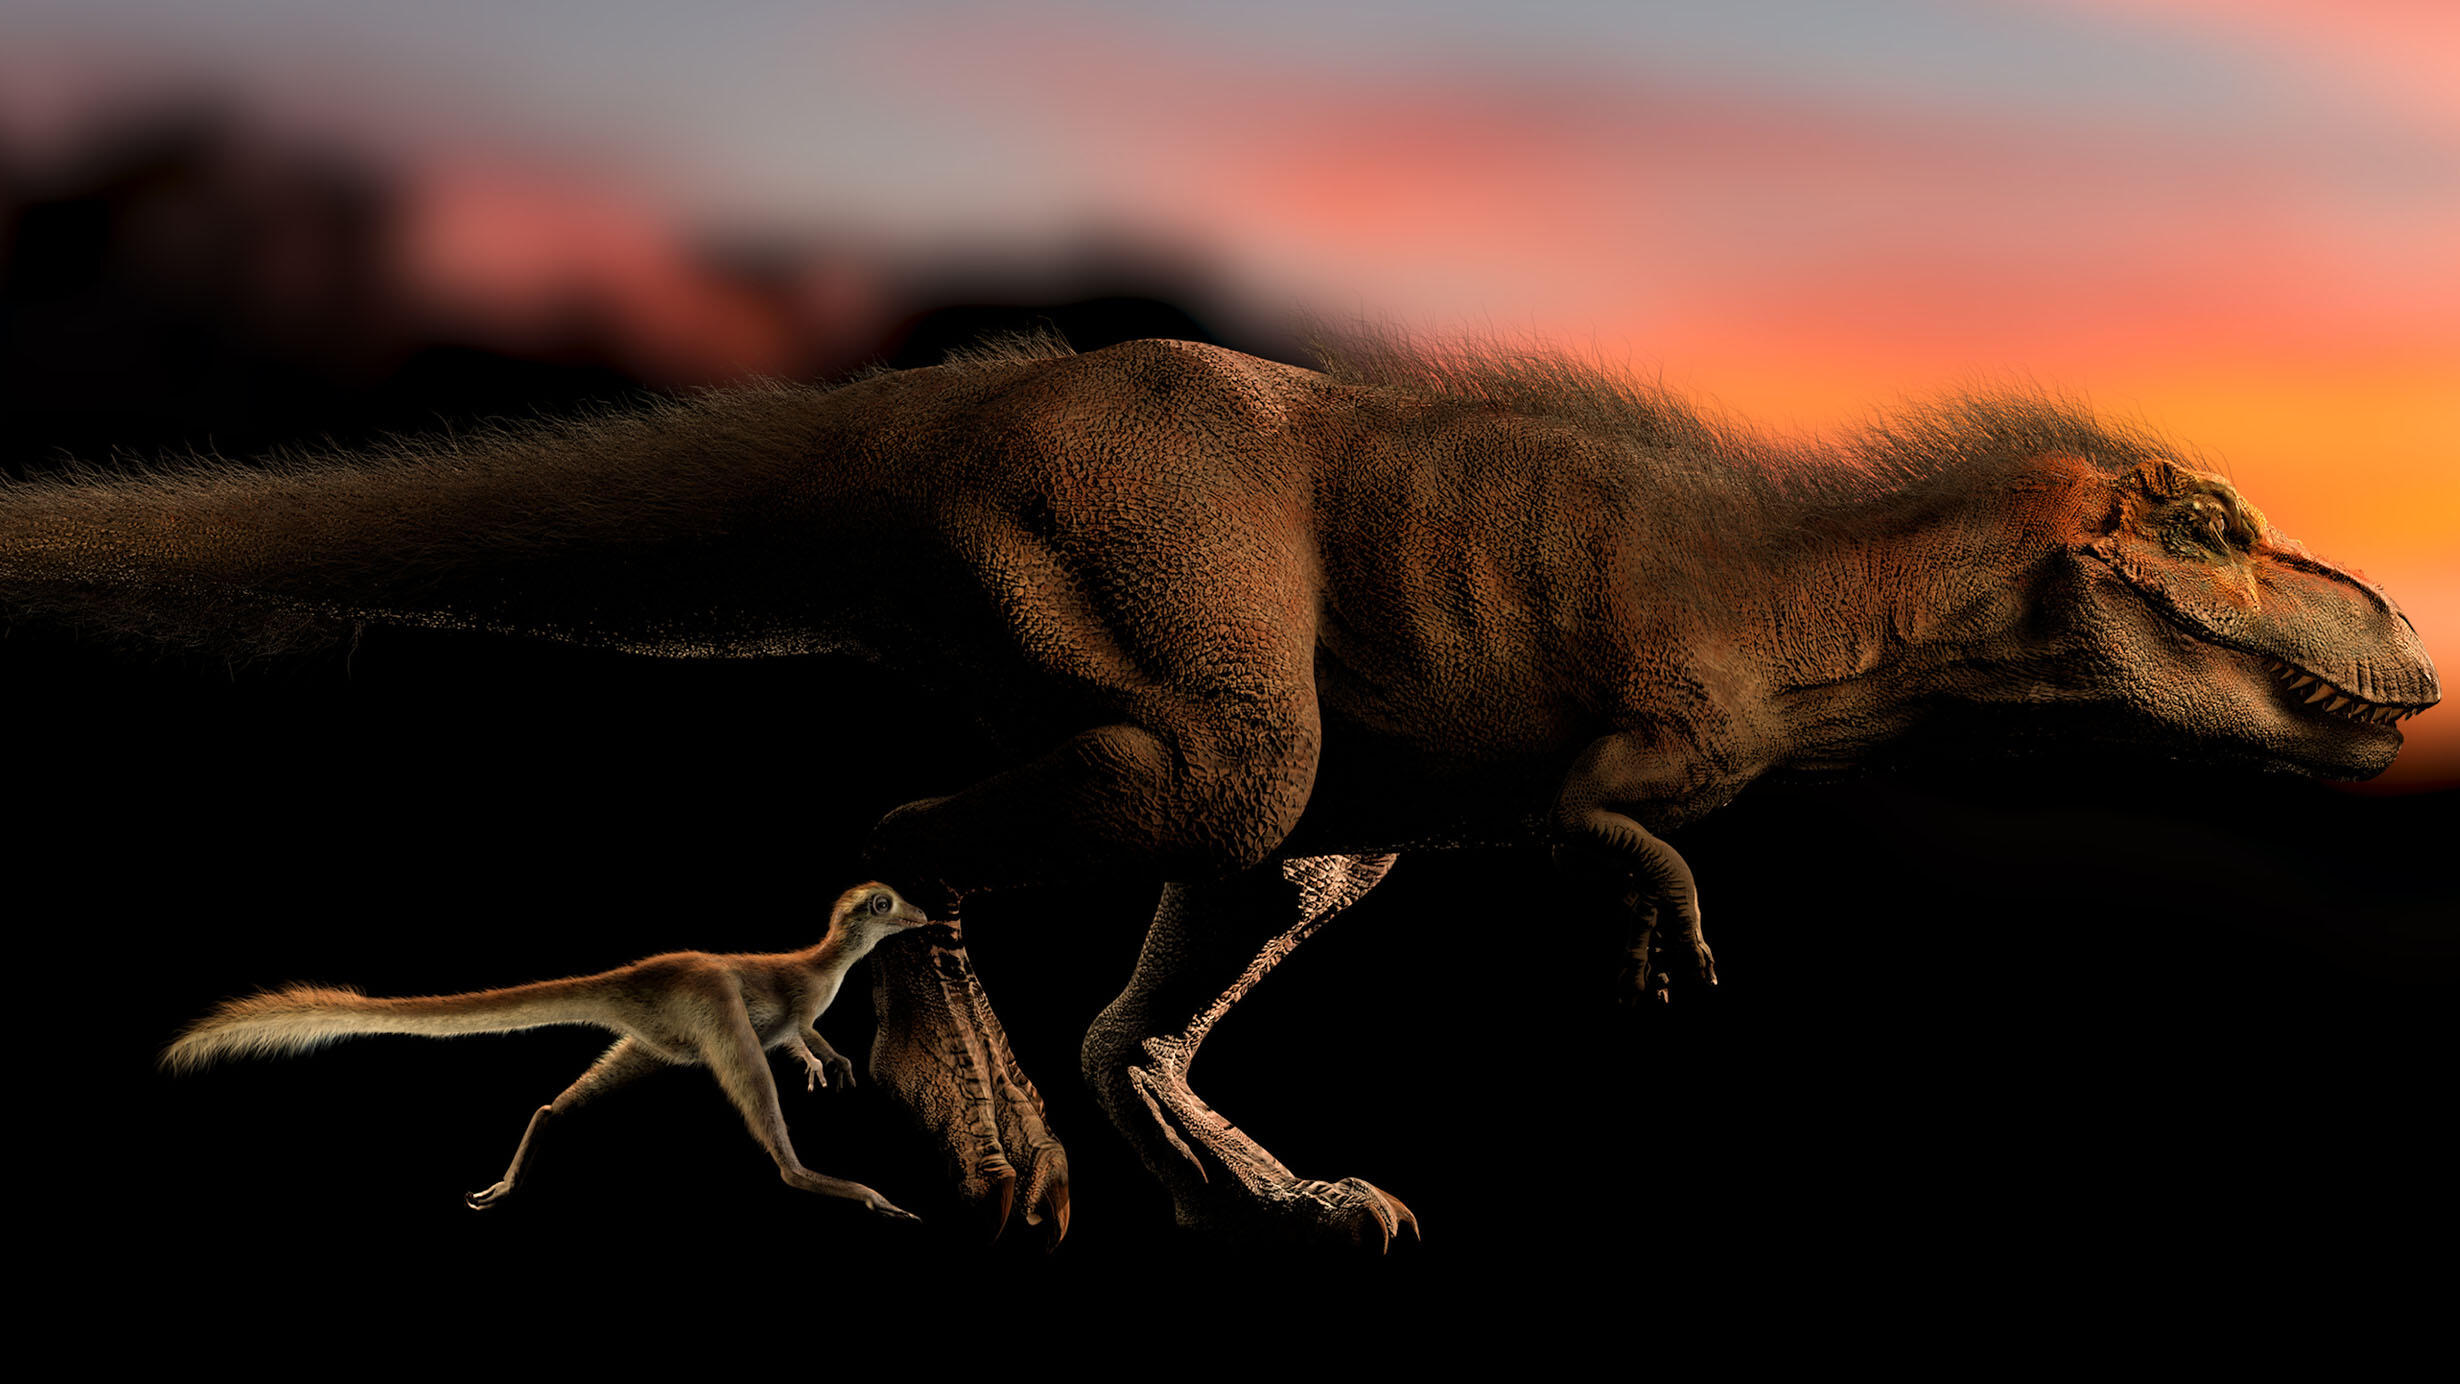 Animated illustration of adult and hatchling Tyrannosaurus rex.